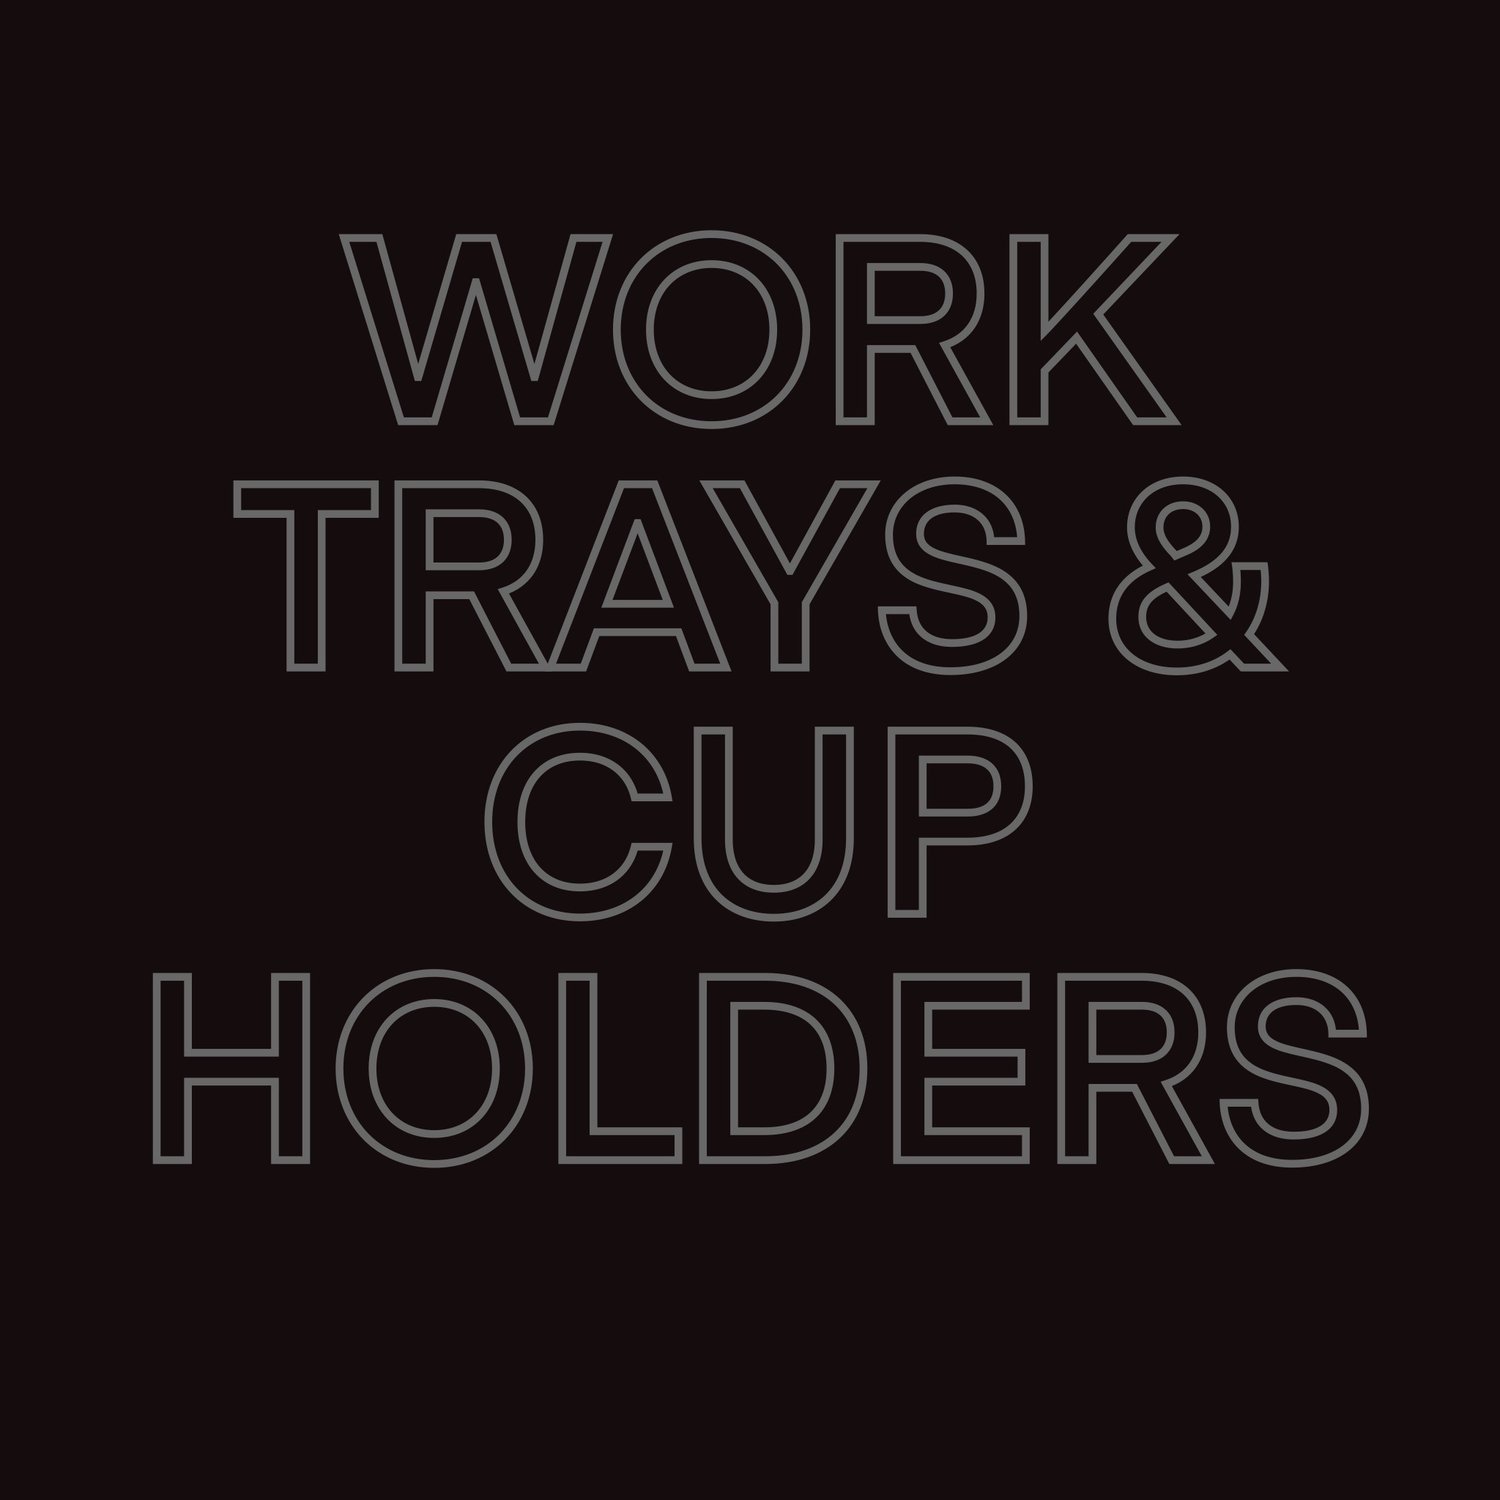 Work trays & cupholders